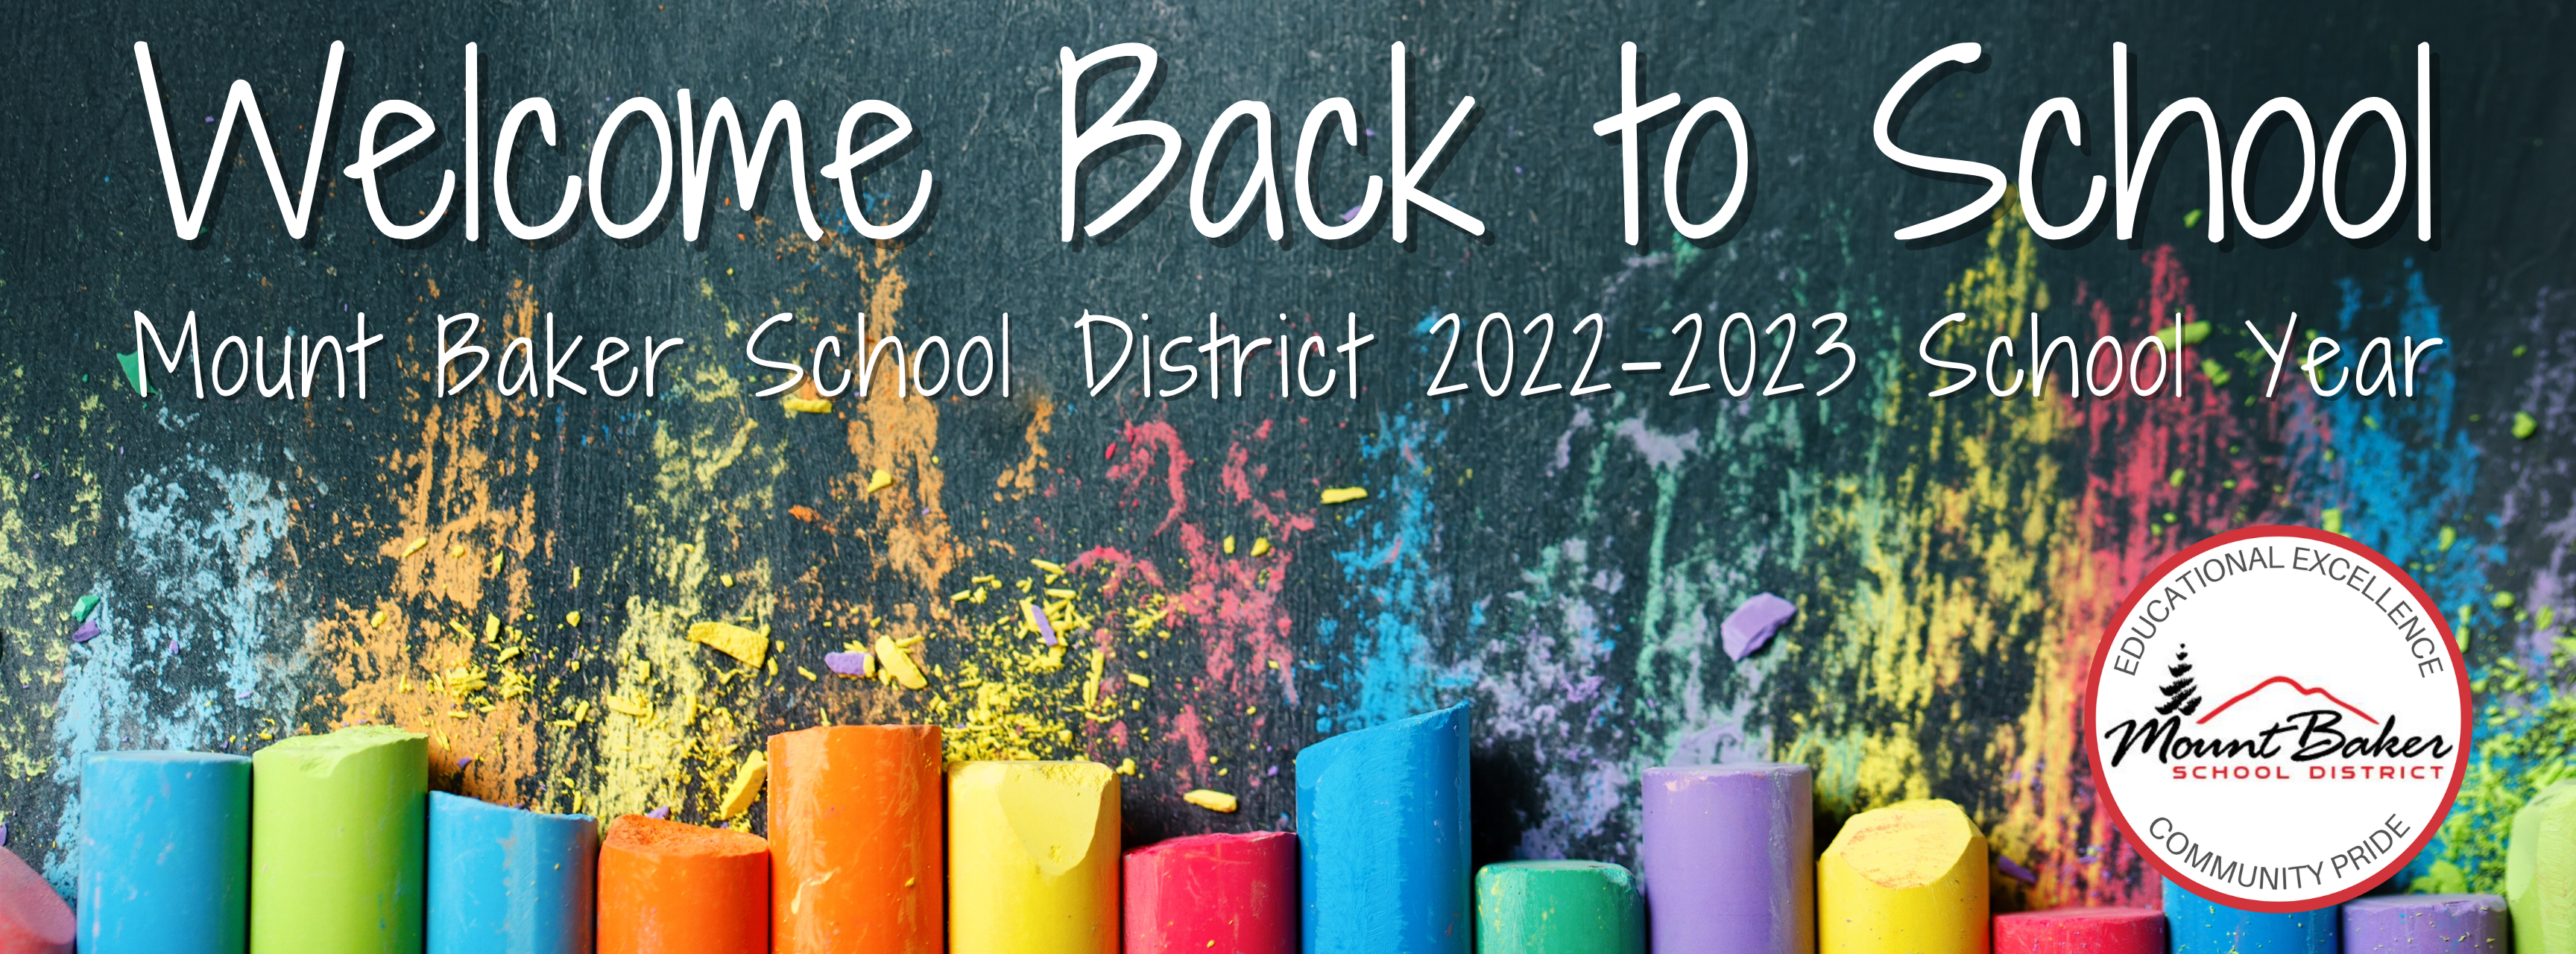 Welcome Back to School 22-23, Chalk, Chalkboard